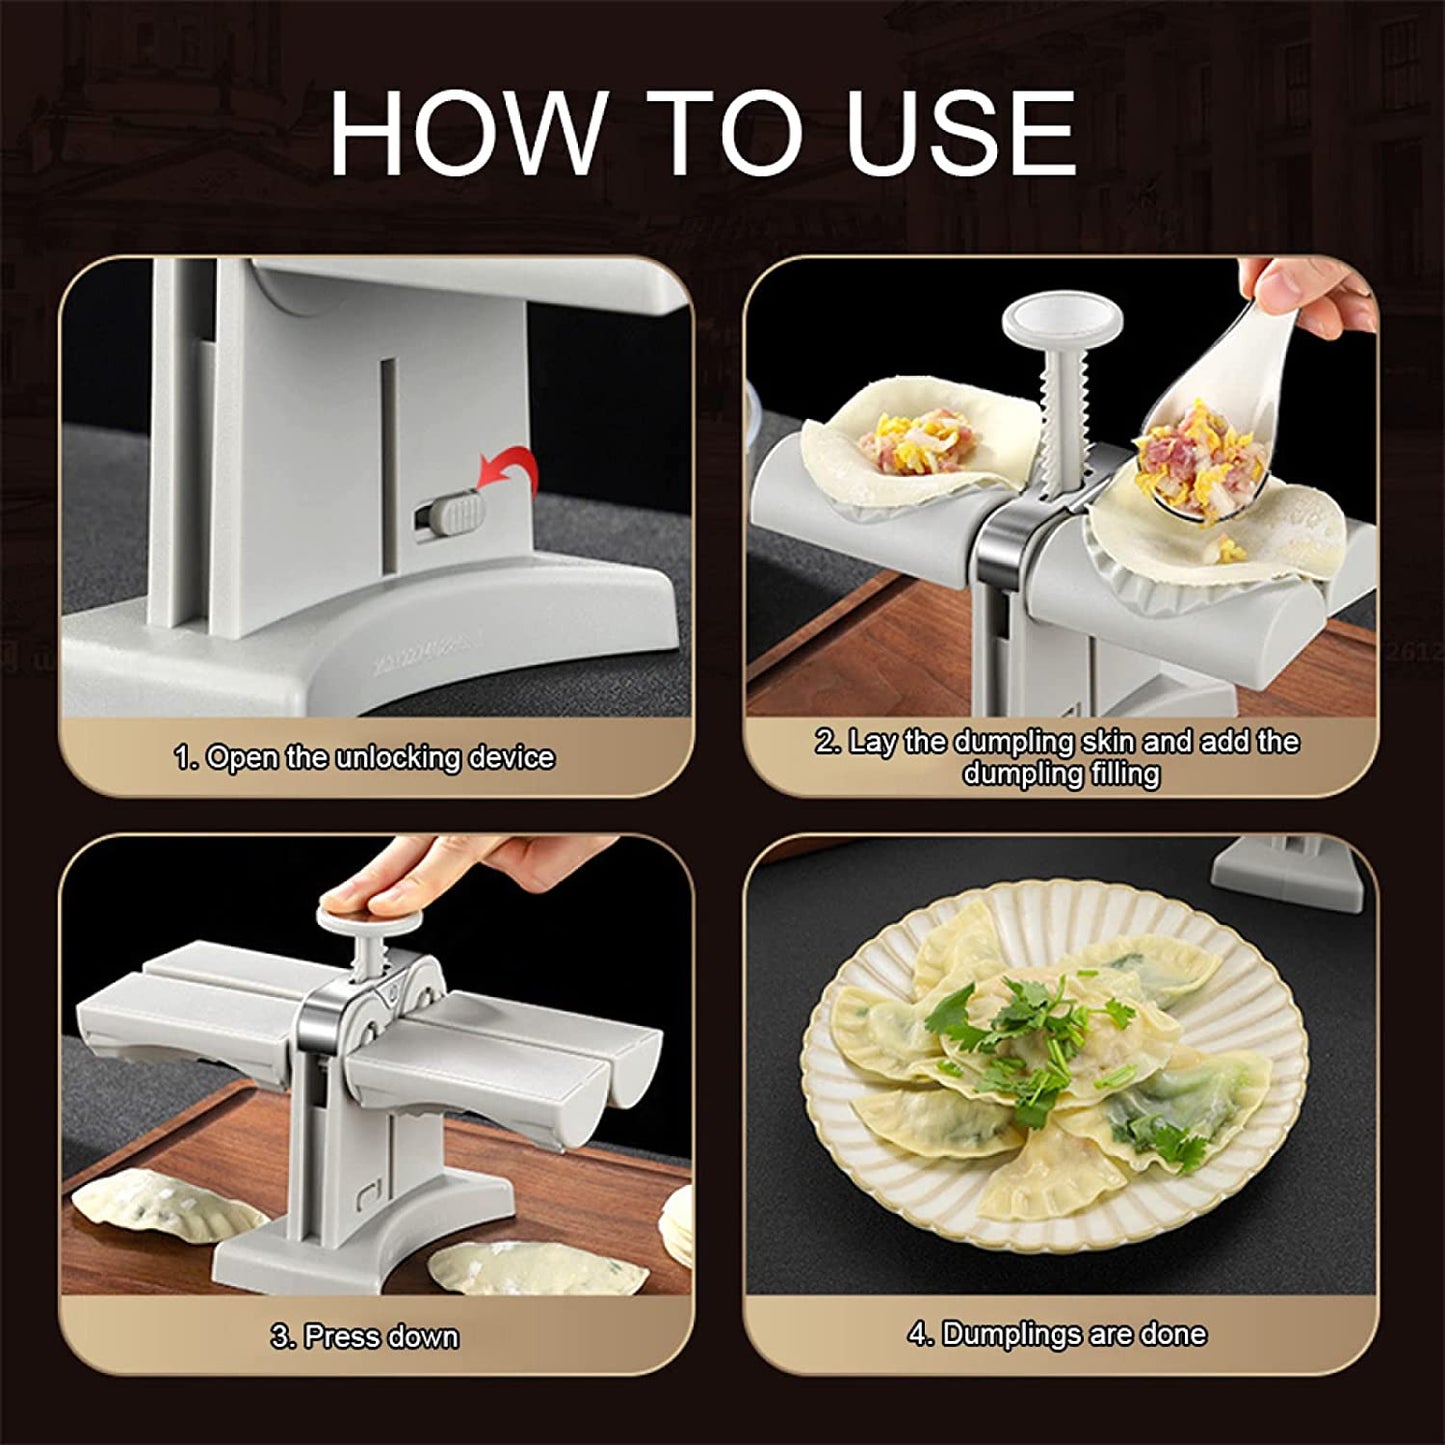 Dumpling Maker: Double Head Manual Press Noodle & Dumpling Mold for Easy Homemade Dumplings - Kitchen Accessories